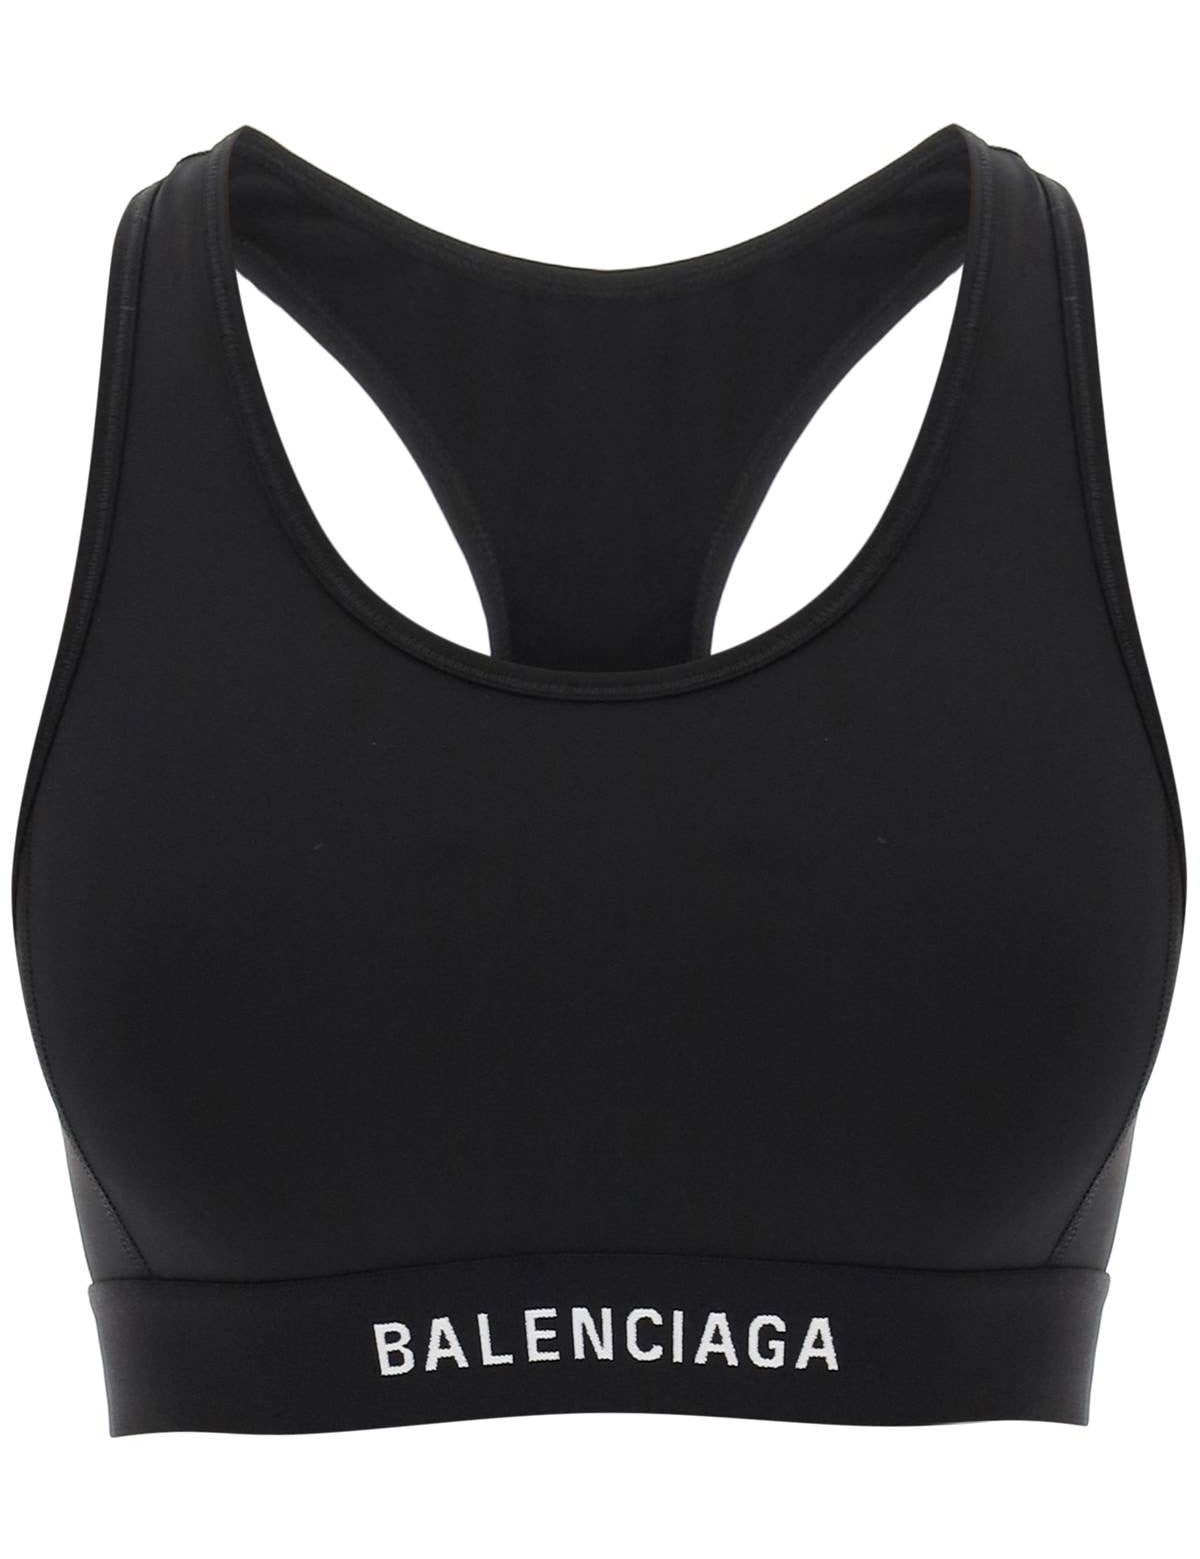 balenciaga-sports-bra-with-contrasting-logo.jpg